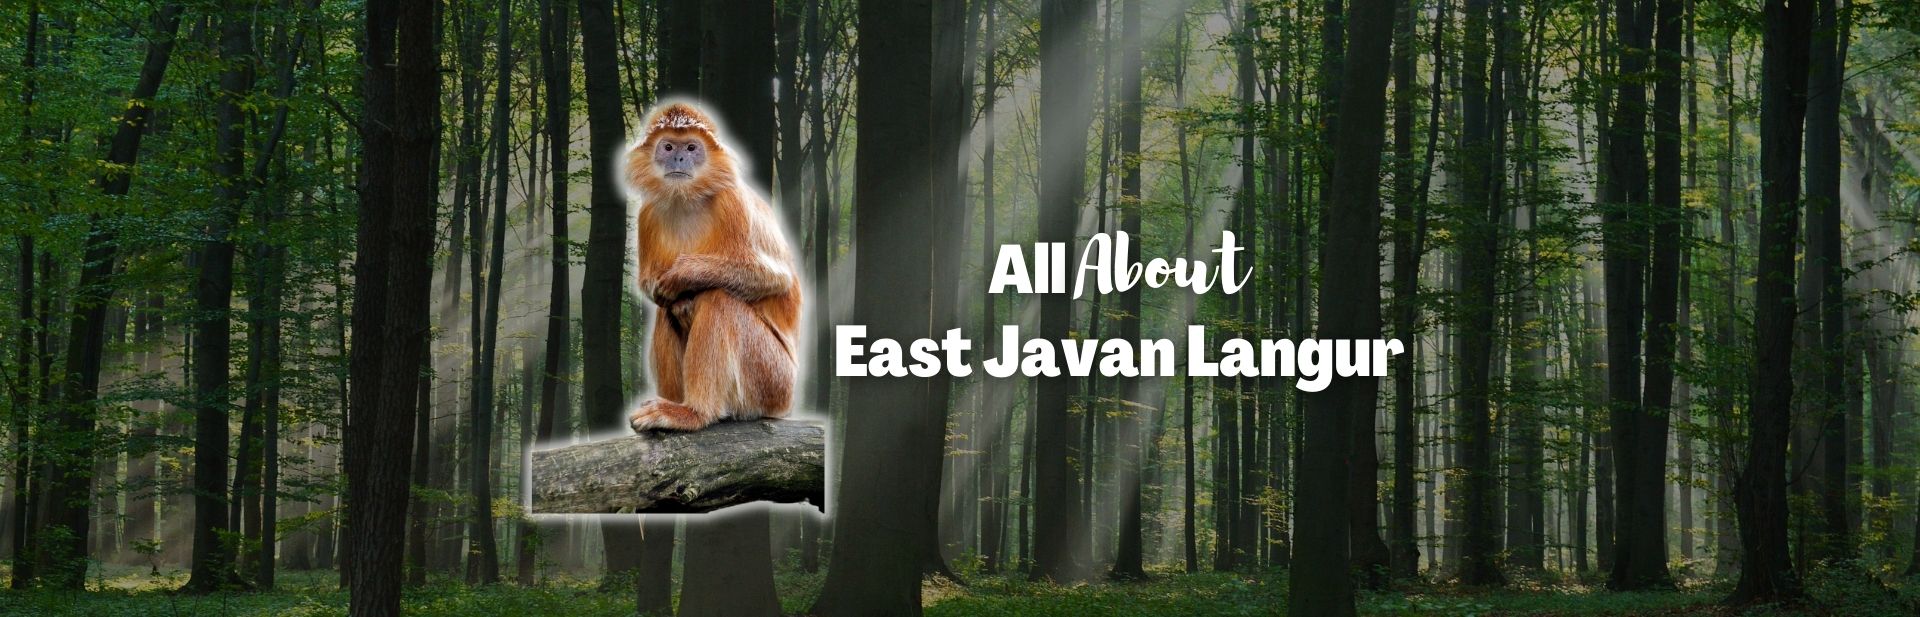 East Javan Langur: The Long-Limbed Langur of Indonesia